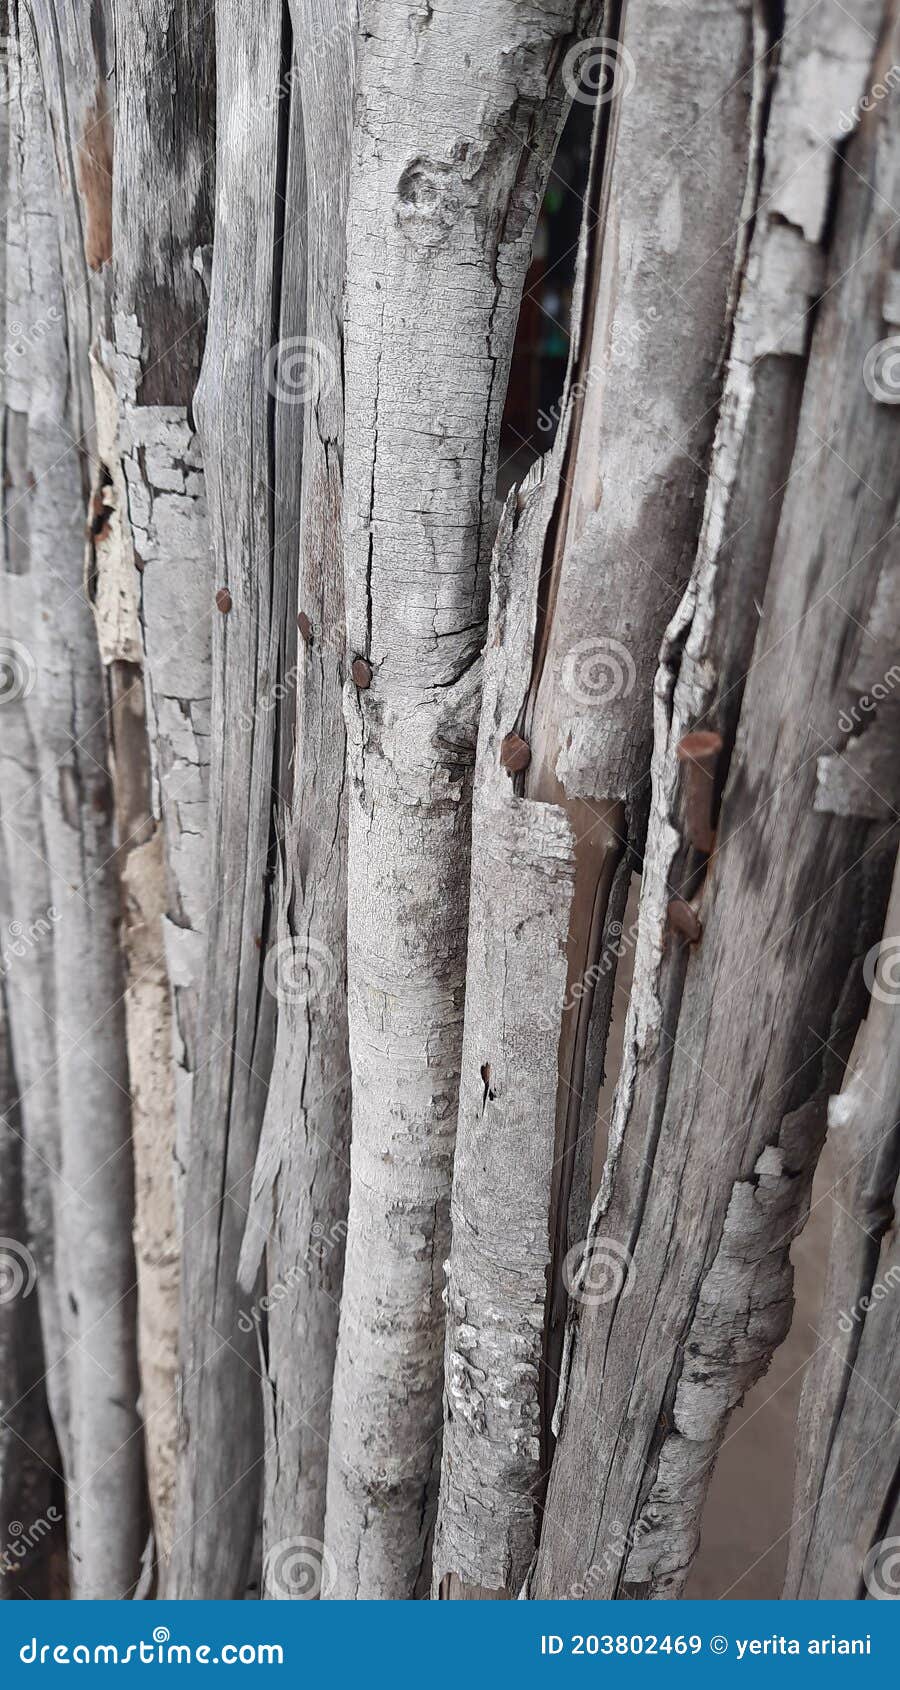 woods fence rustic pagar kayu